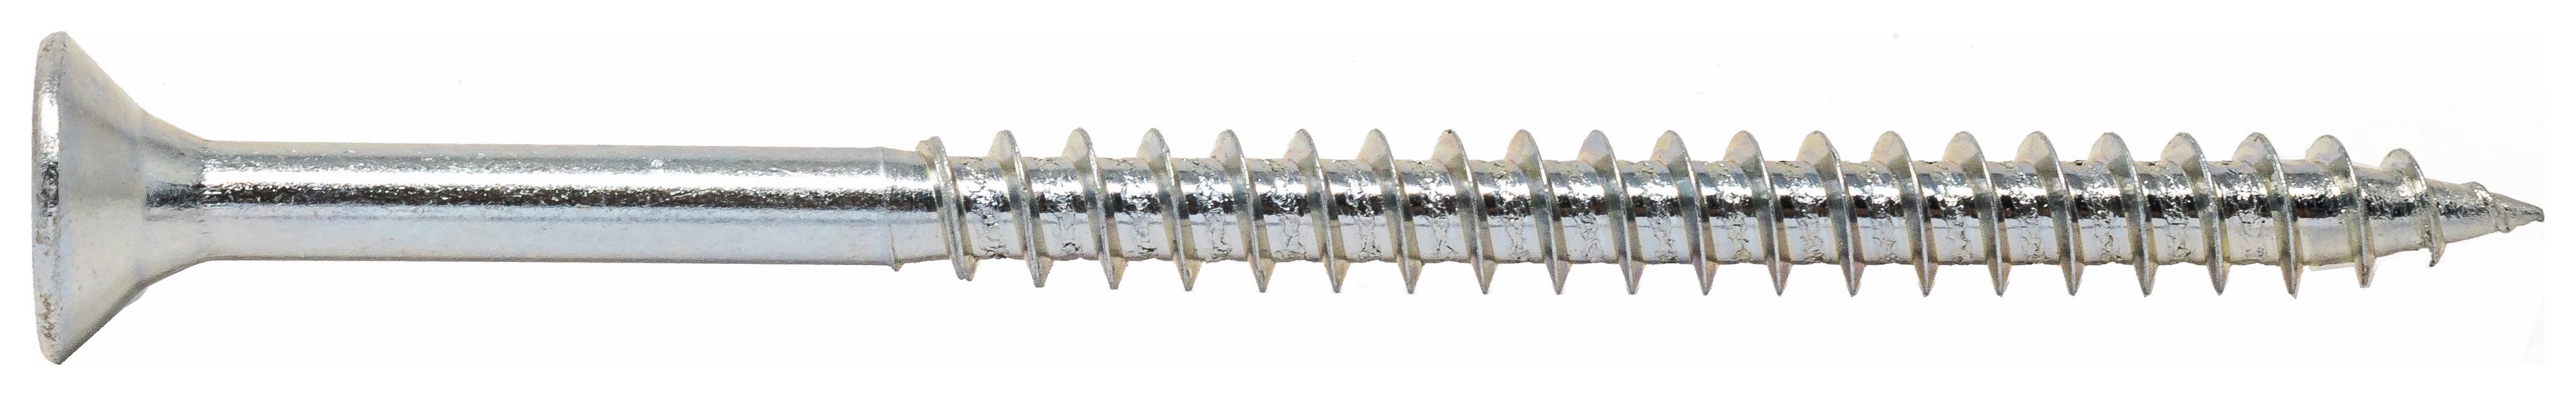 Wickes Single Thread Zinc Plated Screw - 3 X 20mm Pack Of 200